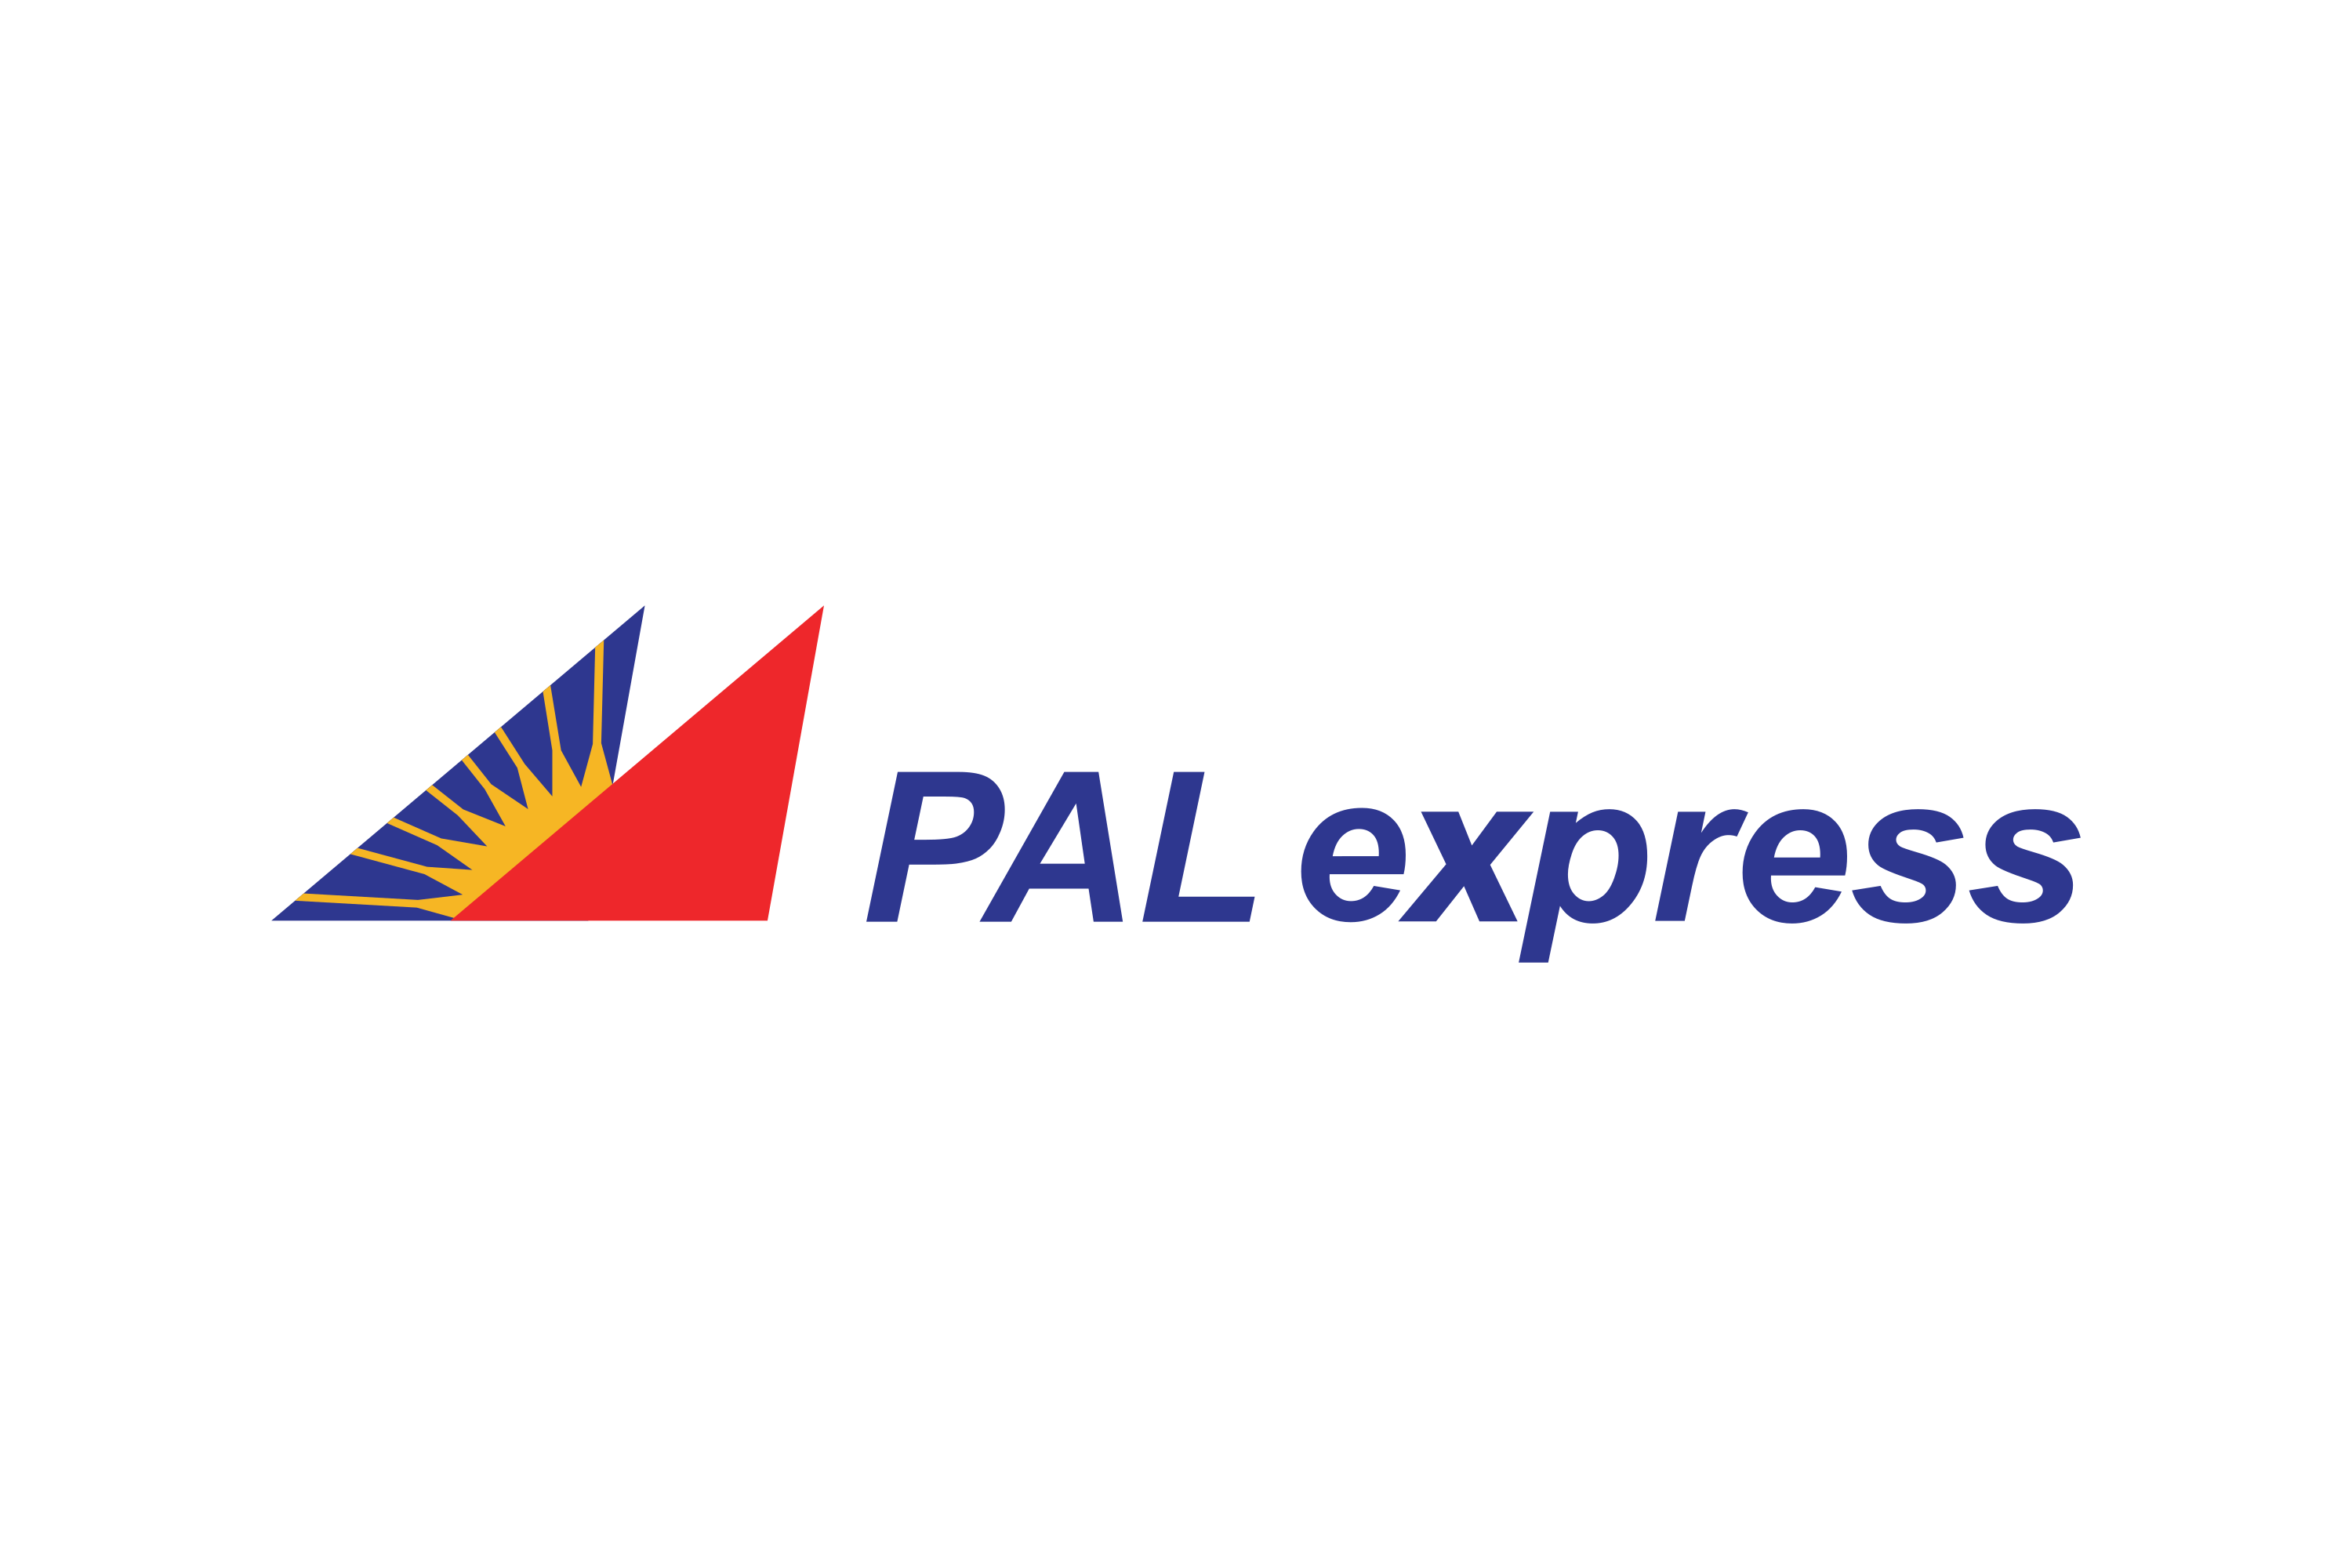 Download PAL Express Logo in SVG Vector or PNG File Format - Logo.wine